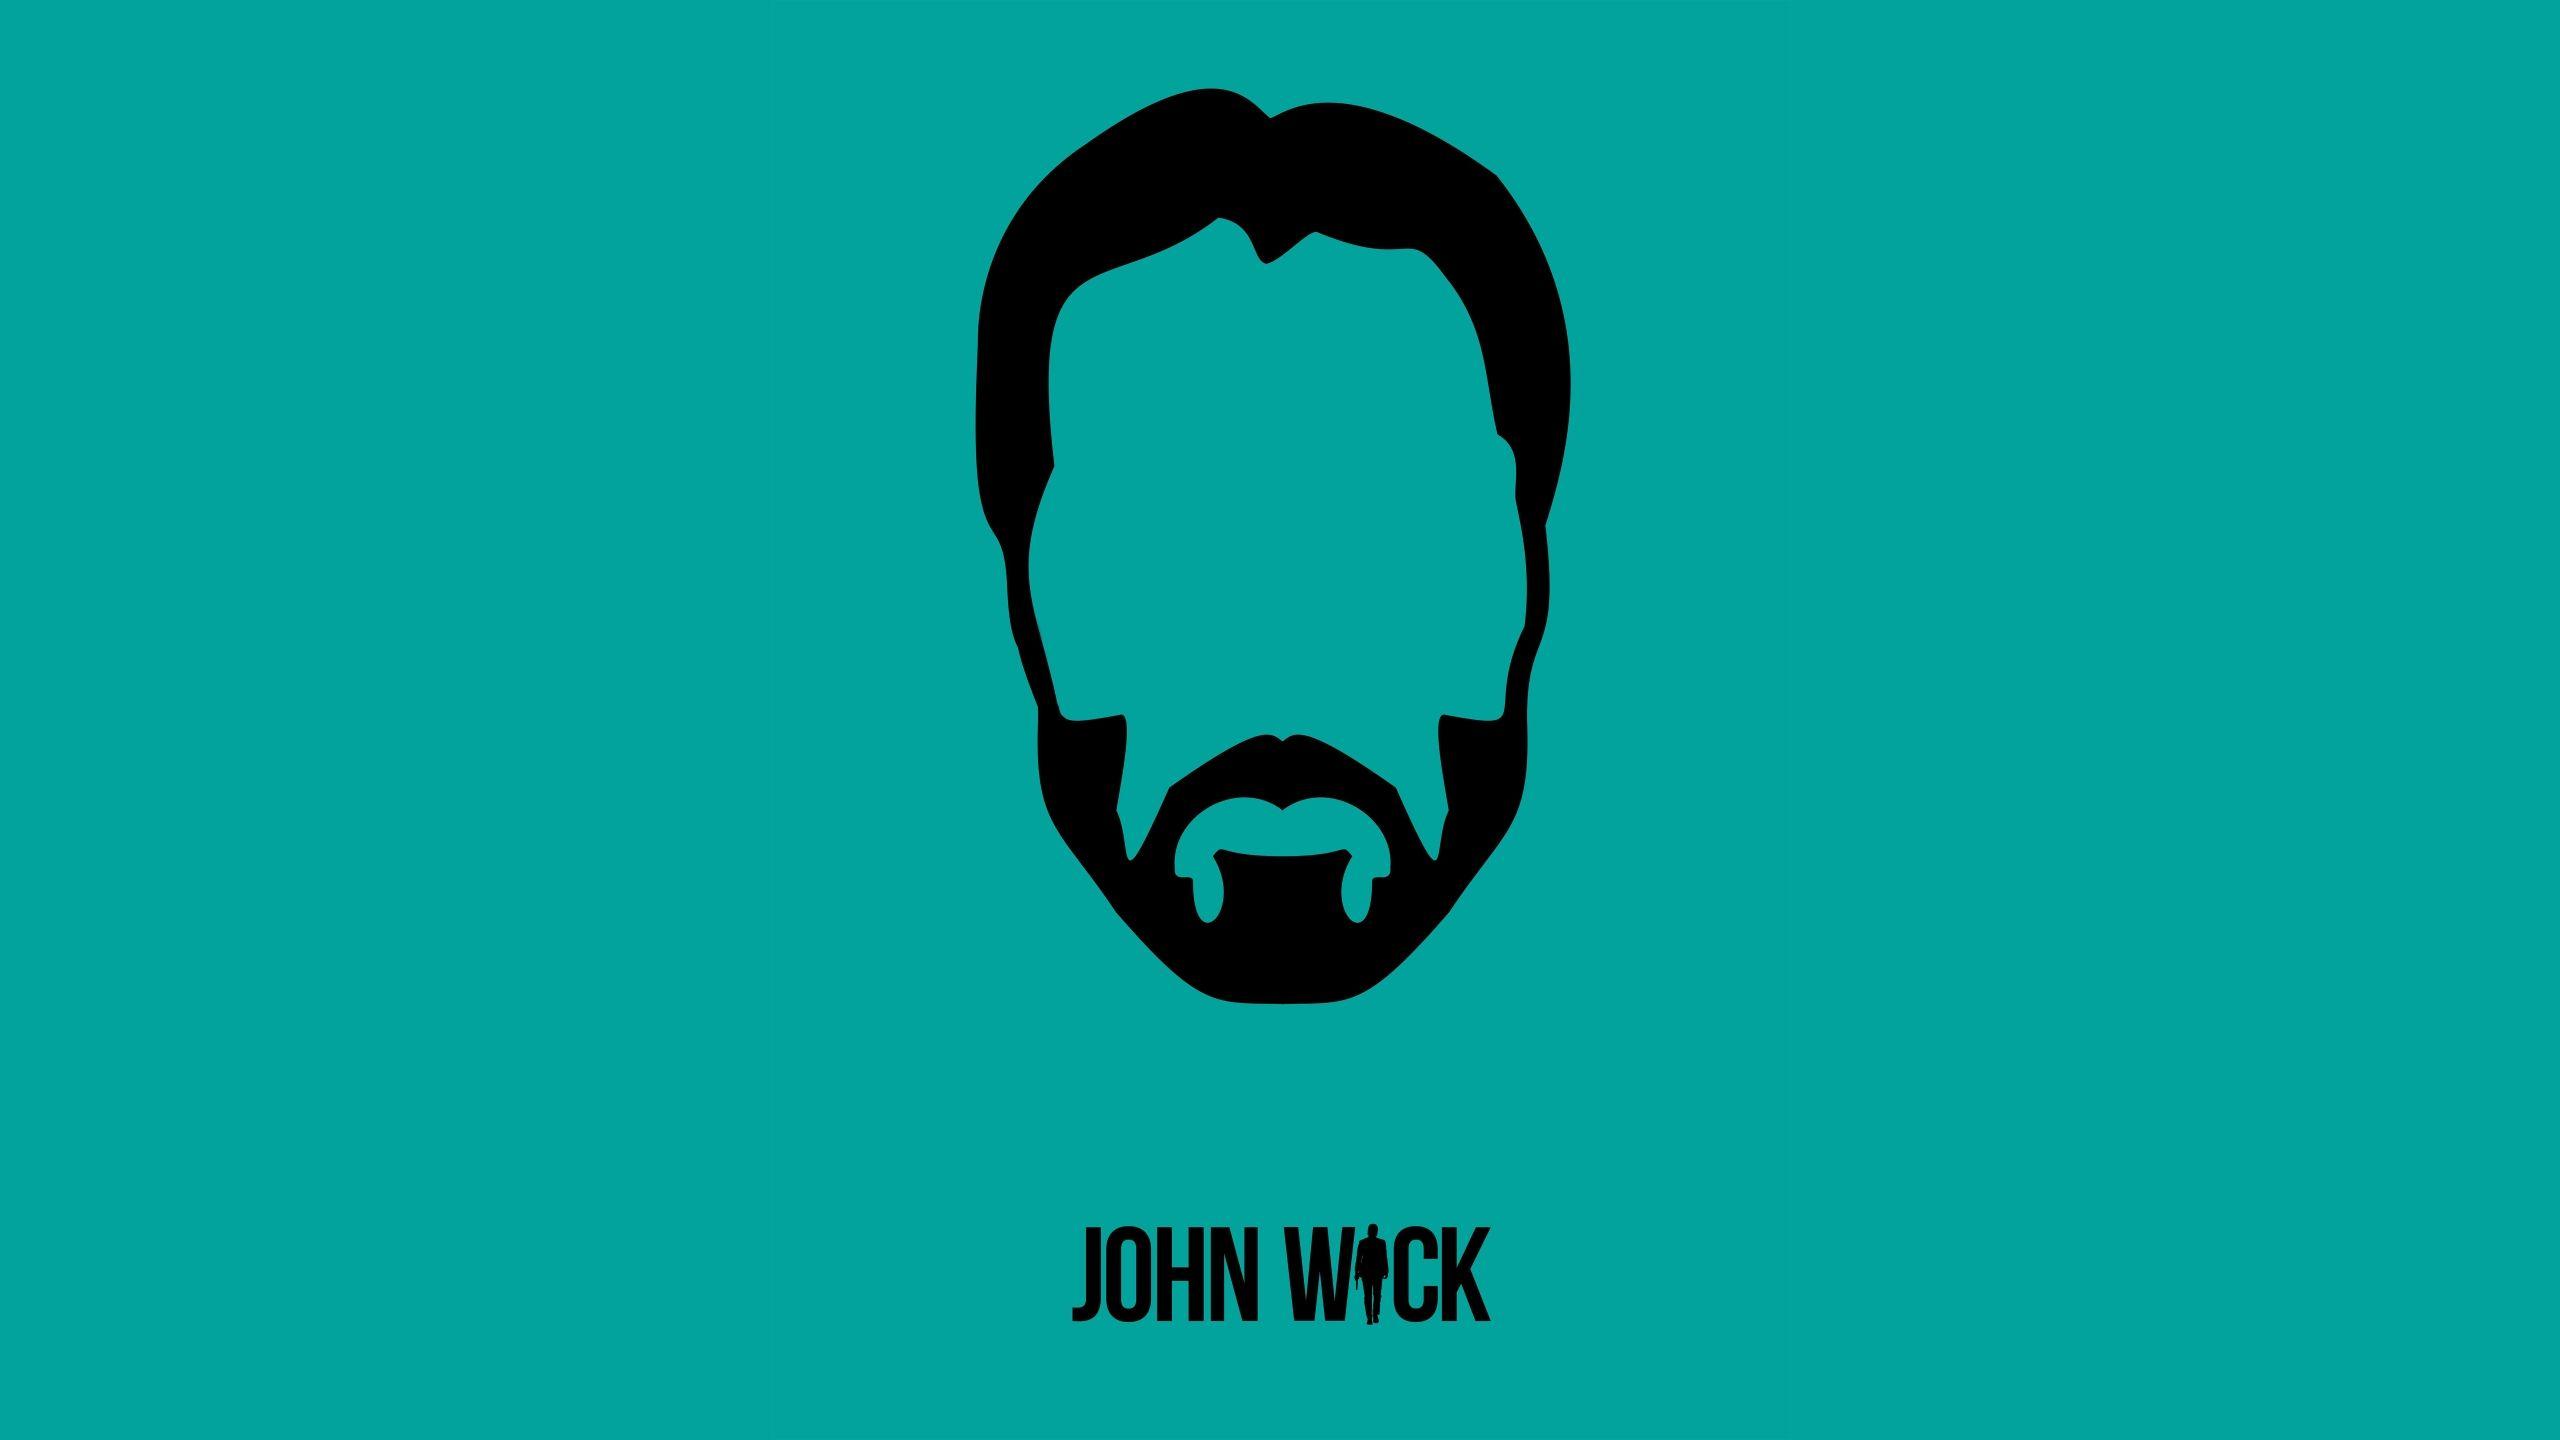 Download John Wick Minimalist Art on Blue Background